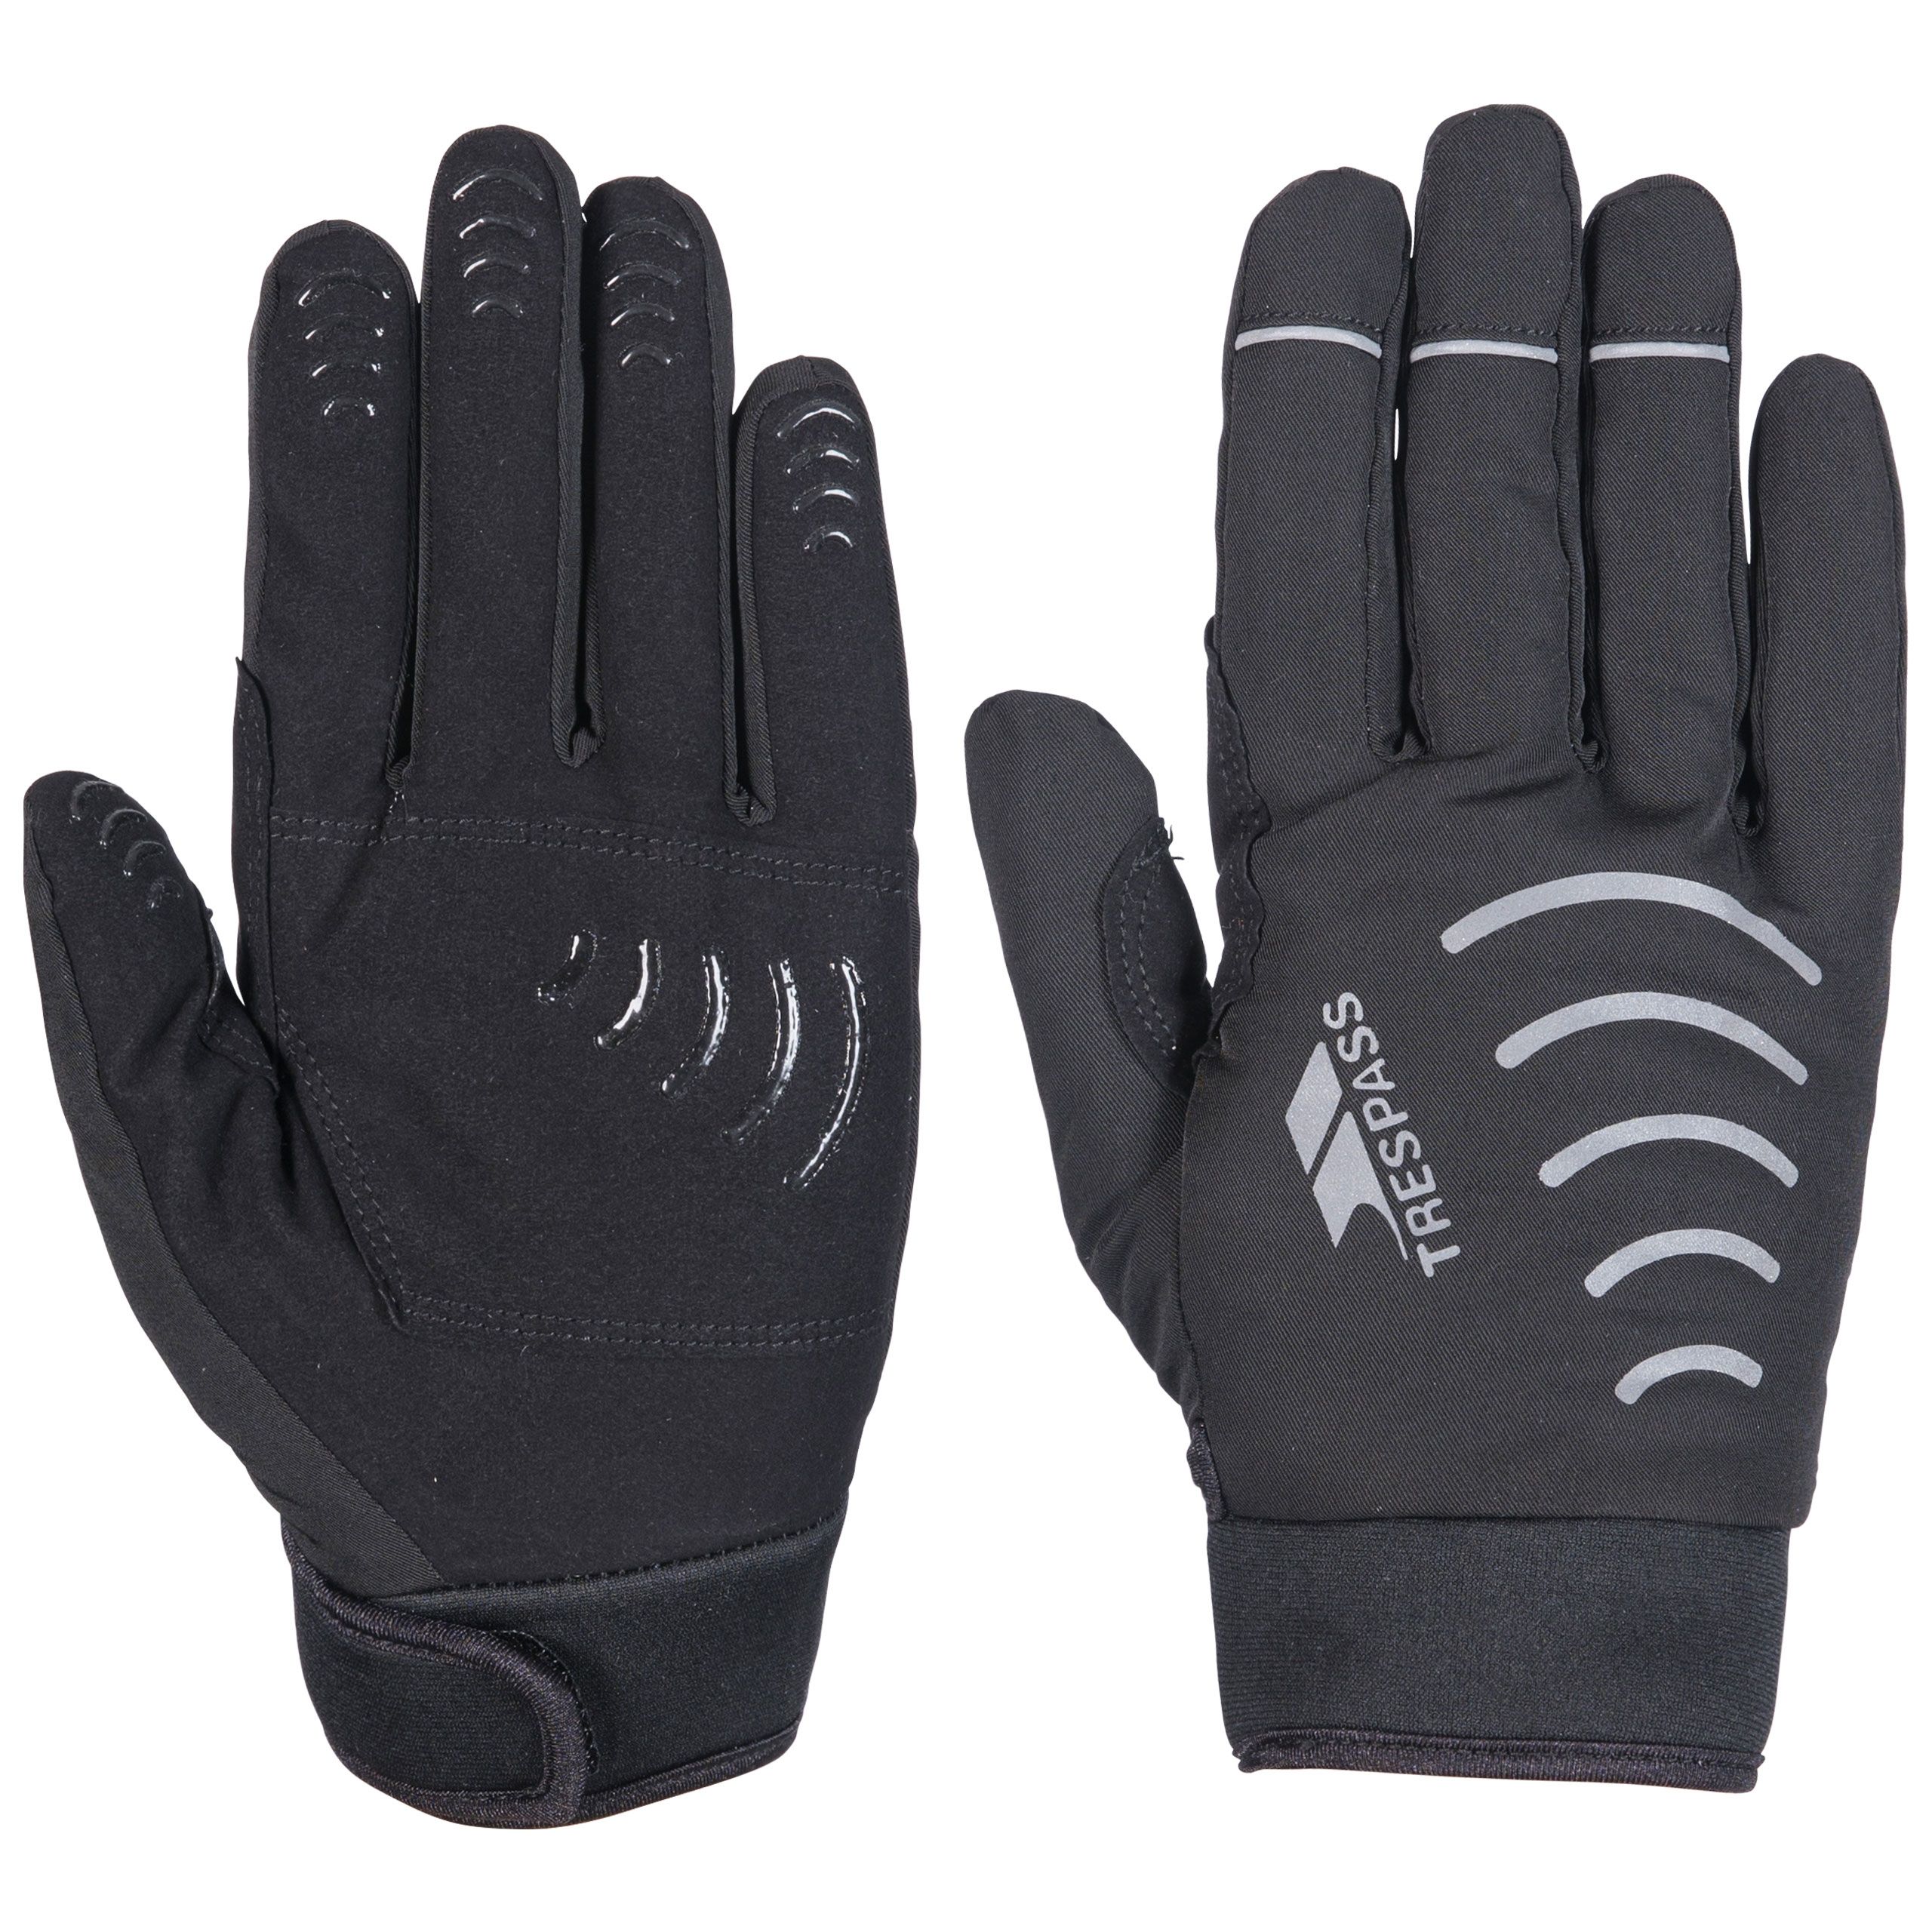 Crossover Unisex Waterproof Gloves